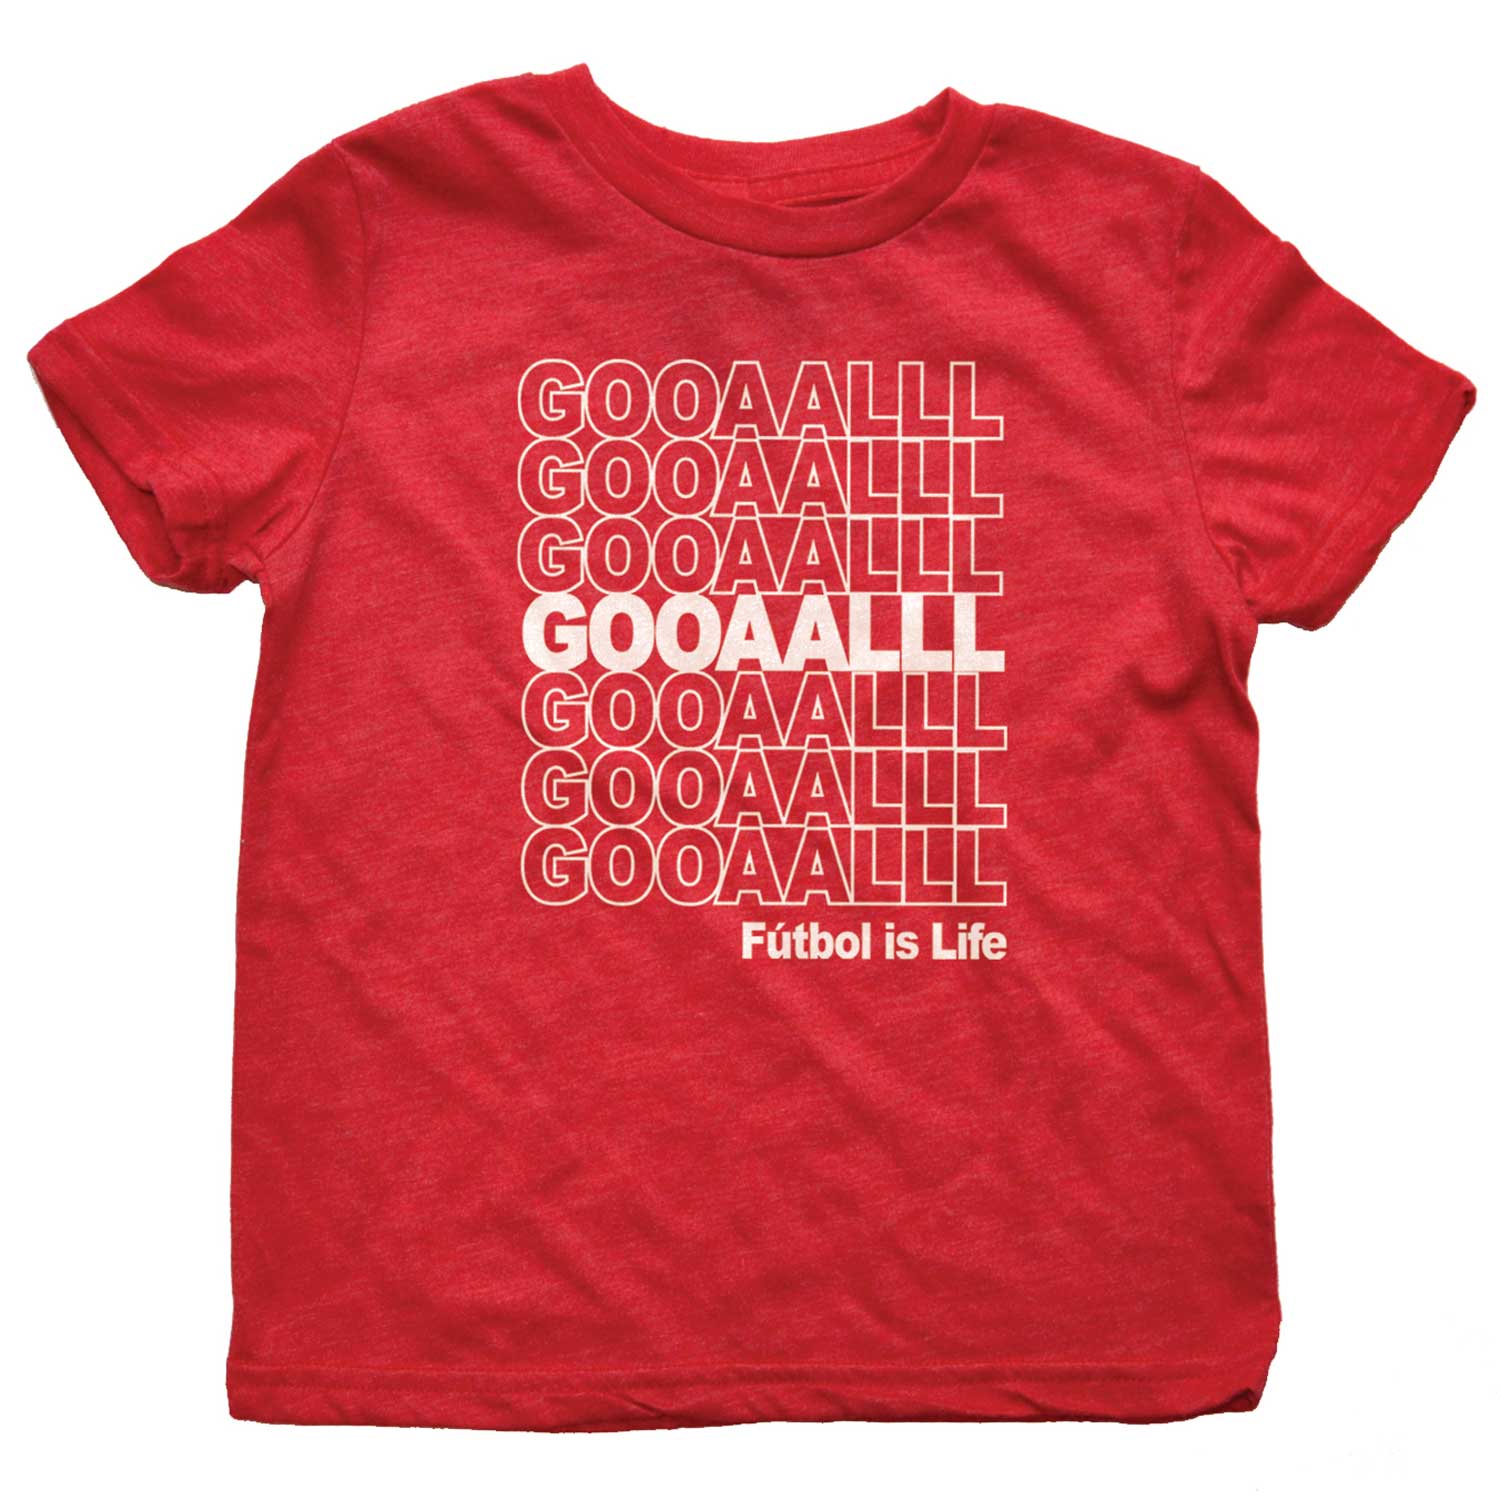 Kids Gooaalll Soccer Cool Futbol is Life Graphic T-Shirt | Cute Retro Sports Tee | Solid Threads